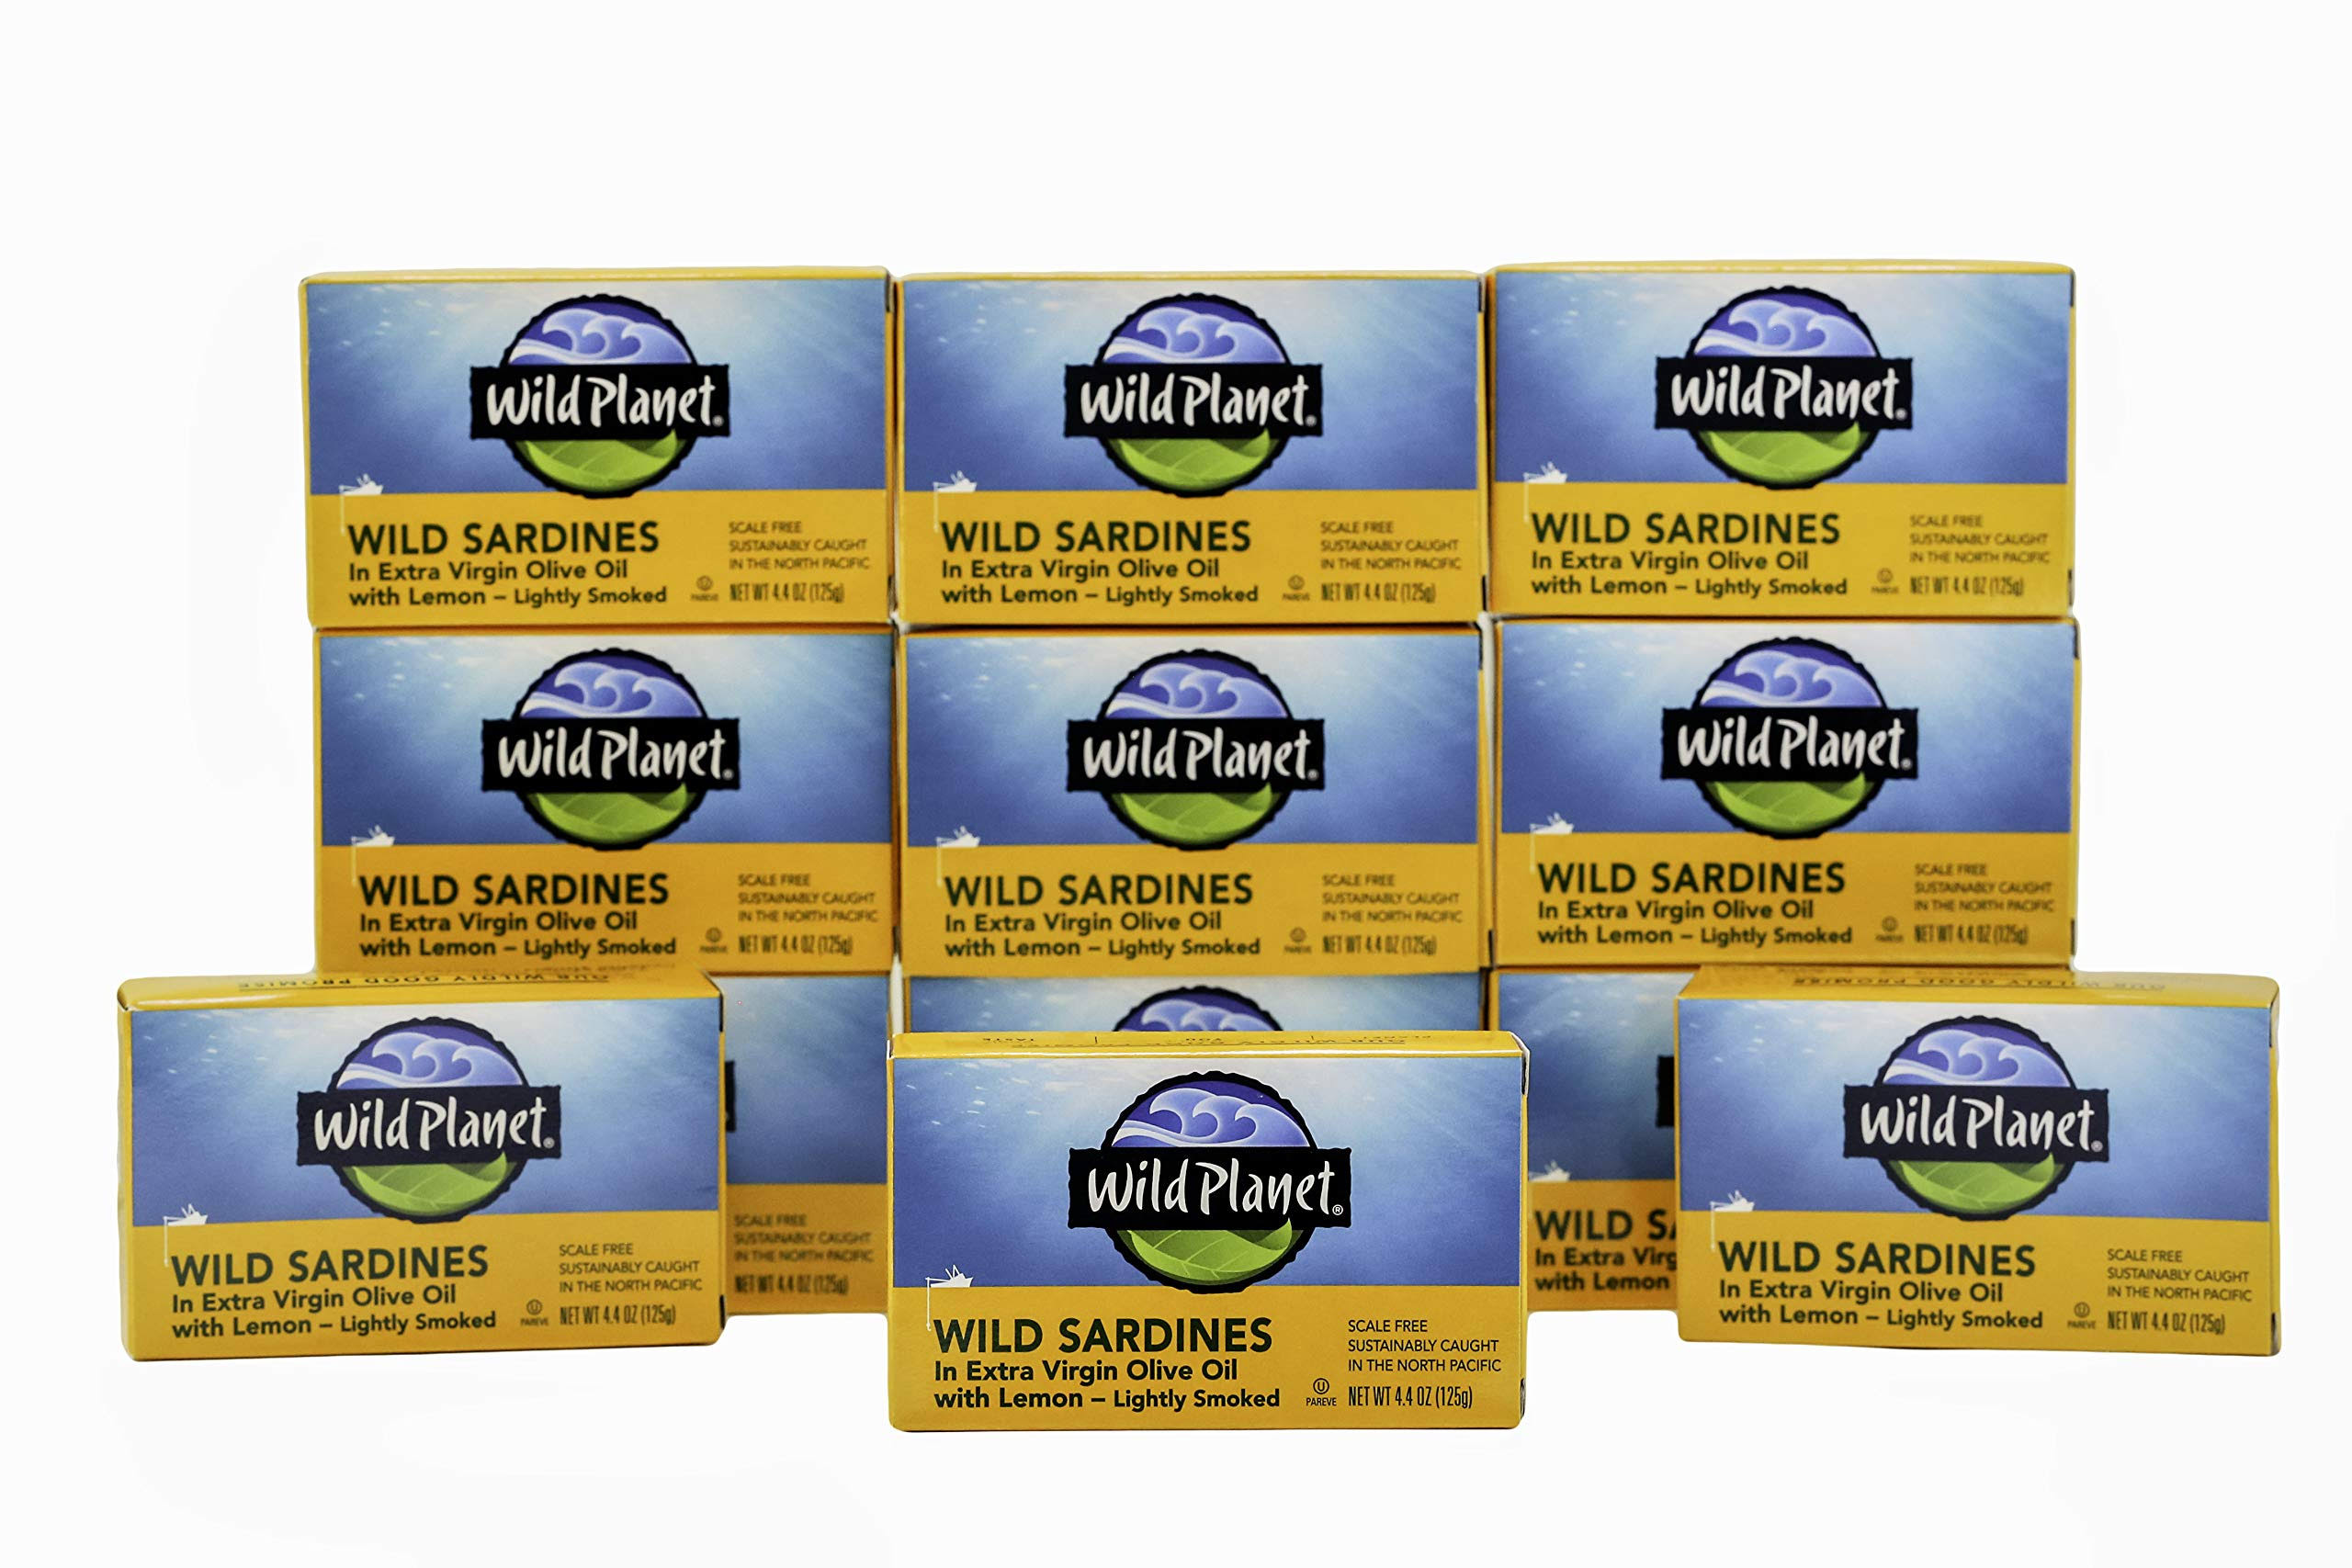 Wild Planet Wild Sardines - Extra Virgin Olive Oil with Lemon, 4.375 oz